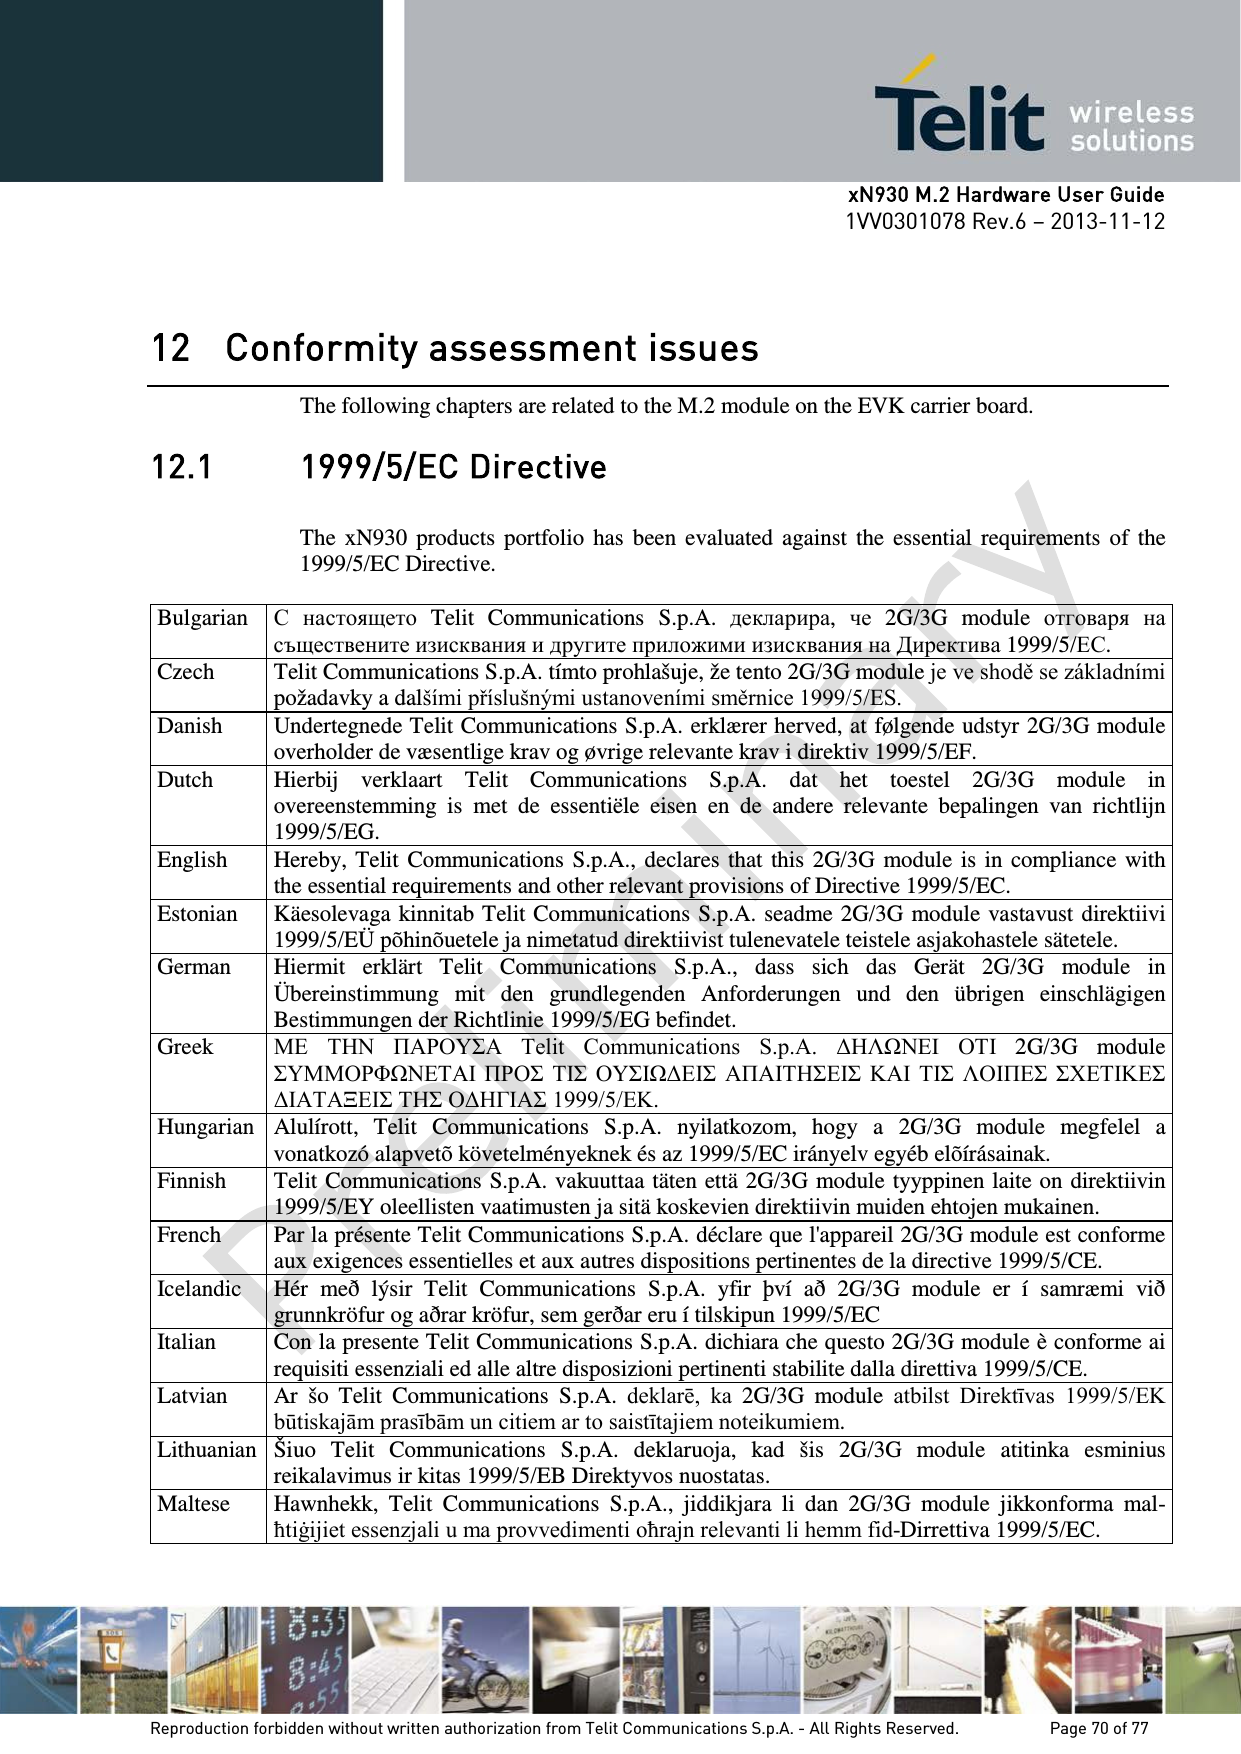      xN930 M.2 Hardware User Guide 1VV0301078 Rev.6 – 2013-11-12    12 Conformity assessment issues The following chapters are related to the M.2 module on the EVK carrier board. 12.1 1999/5/EC Directive  The  xN930 products portfolio has been evaluated against the essential requirements of the 1999/5/EC Directive.  Bulgarian С настоящето Telit  Communications S.p.A. декларира,  че 2G/3G module отговаря на съществените изисквания и другите приложими изисквания на Директива 1999/5/ЕС. Czech Telit Communications S.p.A. tímto prohlašuje, že tento 2G/3G module je ve shodě se základními požadavky a dalšími příslušnými ustanoveními směrnice 1999/5/ES. Danish Undertegnede Telit Communications S.p.A. erklærer herved, at følgende udstyr 2G/3G module overholder de væsentlige krav og øvrige relevante krav i direktiv 1999/5/EF. Dutch Hierbij verklaart Telit  Communications S.p.A. dat het toestel 2G/3G module in overeenstemming is met de essentiële eisen en de andere relevante bepalingen van richtlijn 1999/5/EG. English Hereby, Telit Communications S.p.A., declares that this 2G/3G module is in compliance with the essential requirements and other relevant provisions of Directive 1999/5/EC. Estonian Käesolevaga kinnitab Telit Communications S.p.A. seadme 2G/3G module vastavust direktiivi 1999/5/EÜ põhinõuetele ja nimetatud direktiivist tulenevatele teistele asjakohastele sätetele. German Hiermit erklärt Telit Communications S.p.A., dass sich das Gerät 2G/3G module in Übereinstimmung mit den grundlegenden Anforderungen und den übrigen einschlägigen Bestimmungen der Richtlinie 1999/5/EG befindet. Greek ΜΕ  ΤΗΝ  ΠΑΡΟΥΣΑ  Telit  Communications  S.p.A.  ΔΗΛΩΝΕΙ  ΟΤΙ  2G/3G module ΣΥΜΜΟΡΦΩΝΕΤΑΙ ΠΡΟΣ ΤΙΣ ΟΥΣΙΩΔΕΙΣ ΑΠΑΙΤΗΣΕΙΣ ΚΑΙ  ΤΙΣ  ΛΟΙΠΕΣ ΣΧΕΤΙΚΕΣ ΔΙΑΤΑΞΕΙΣ ΤΗΣ ΟΔΗΓΙΑΣ 1999/5/ΕΚ. Hungarian Alulírott, Telit Communications S.p.A. nyilatkozom, hogy a 2G/3G module megfelel a vonatkozó alapvetõ követelményeknek és az 1999/5/EC irányelv egyéb elõírásainak. Finnish Telit Communications S.p.A. vakuuttaa täten että 2G/3G module tyyppinen laite on direktiivin 1999/5/EY oleellisten vaatimusten ja sitä koskevien direktiivin muiden ehtojen mukainen. French Par la présente Telit Communications S.p.A. déclare que l&apos;appareil 2G/3G module est conforme aux exigences essentielles et aux autres dispositions pertinentes de la directive 1999/5/CE. Icelandic Hér með lýsir Telit Communications S.p.A. yfir því að 2G/3G module er í samræmi við grunnkröfur og aðrar kröfur, sem gerðar eru í tilskipun 1999/5/EC Italian Con la presente Telit Communications S.p.A. dichiara che questo 2G/3G module è conforme ai requisiti essenziali ed alle altre disposizioni pertinenti stabilite dalla direttiva 1999/5/CE. Latvian Ar šo Telit Communications S.p.A. deklarē,  ka  2G/3G module atbilst Direktīvas 1999/5/EK būtiskajām prasībām un citiem ar to saistītajiem noteikumiem. Lithuanian Šiuo Telit Communications S.p.A. deklaruoja, kad šis 2G/3G module atitinka esminius reikalavimus ir kitas 1999/5/EB Direktyvos nuostatas. Maltese Hawnhekk,  Telit Communications S.p.A., jiddikjara li dan 2G/3G module jikkonforma mal-ħtiġijiet essenzjali u ma provvedimenti oħrajn relevanti li hemm fid-Dirrettiva 1999/5/EC.   Reproduction forbidden without written authorization from Telit Communications S.p.A. - All Rights Reserved.    Page 70 of 77 